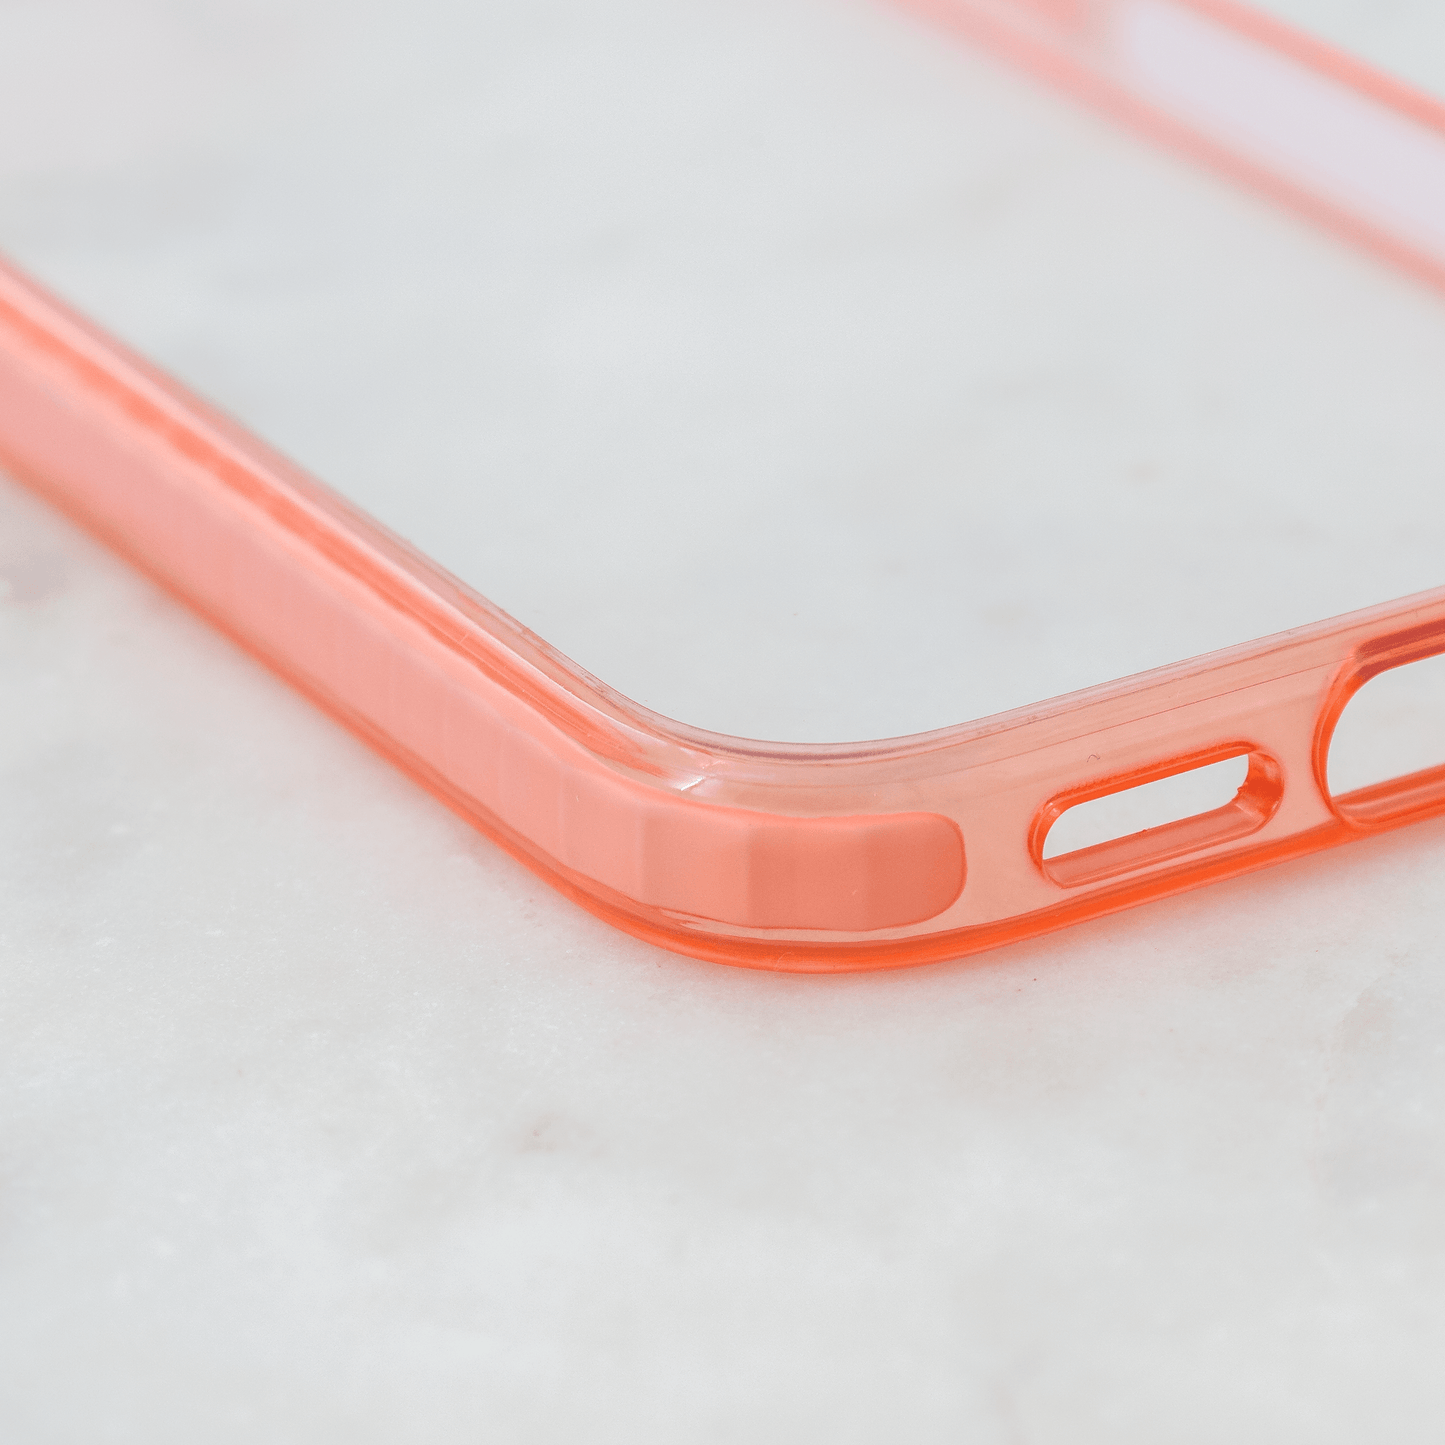 Florescent Impact Case for iPhone - Grapefruit - Strapless